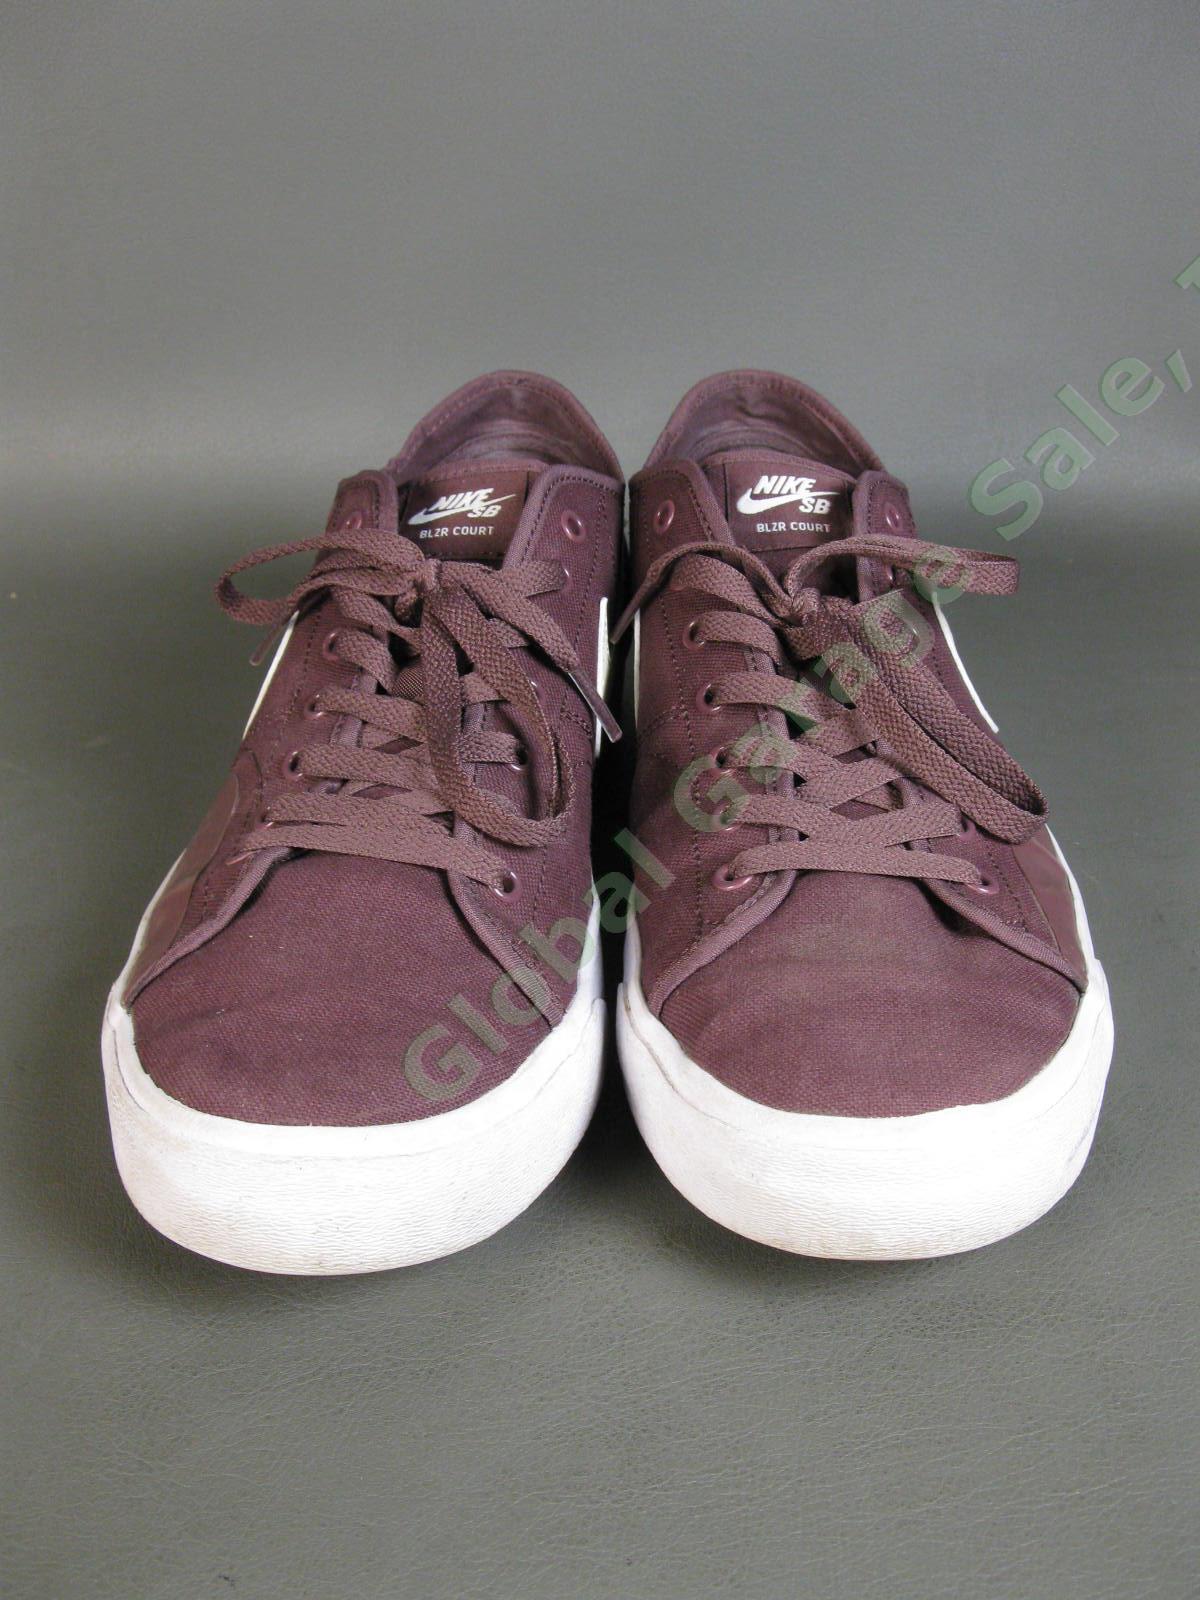 Nike SB Blazer Court Sneakers Shoes CV1658-601 Dark Wine Purple US Mens Size 12 1